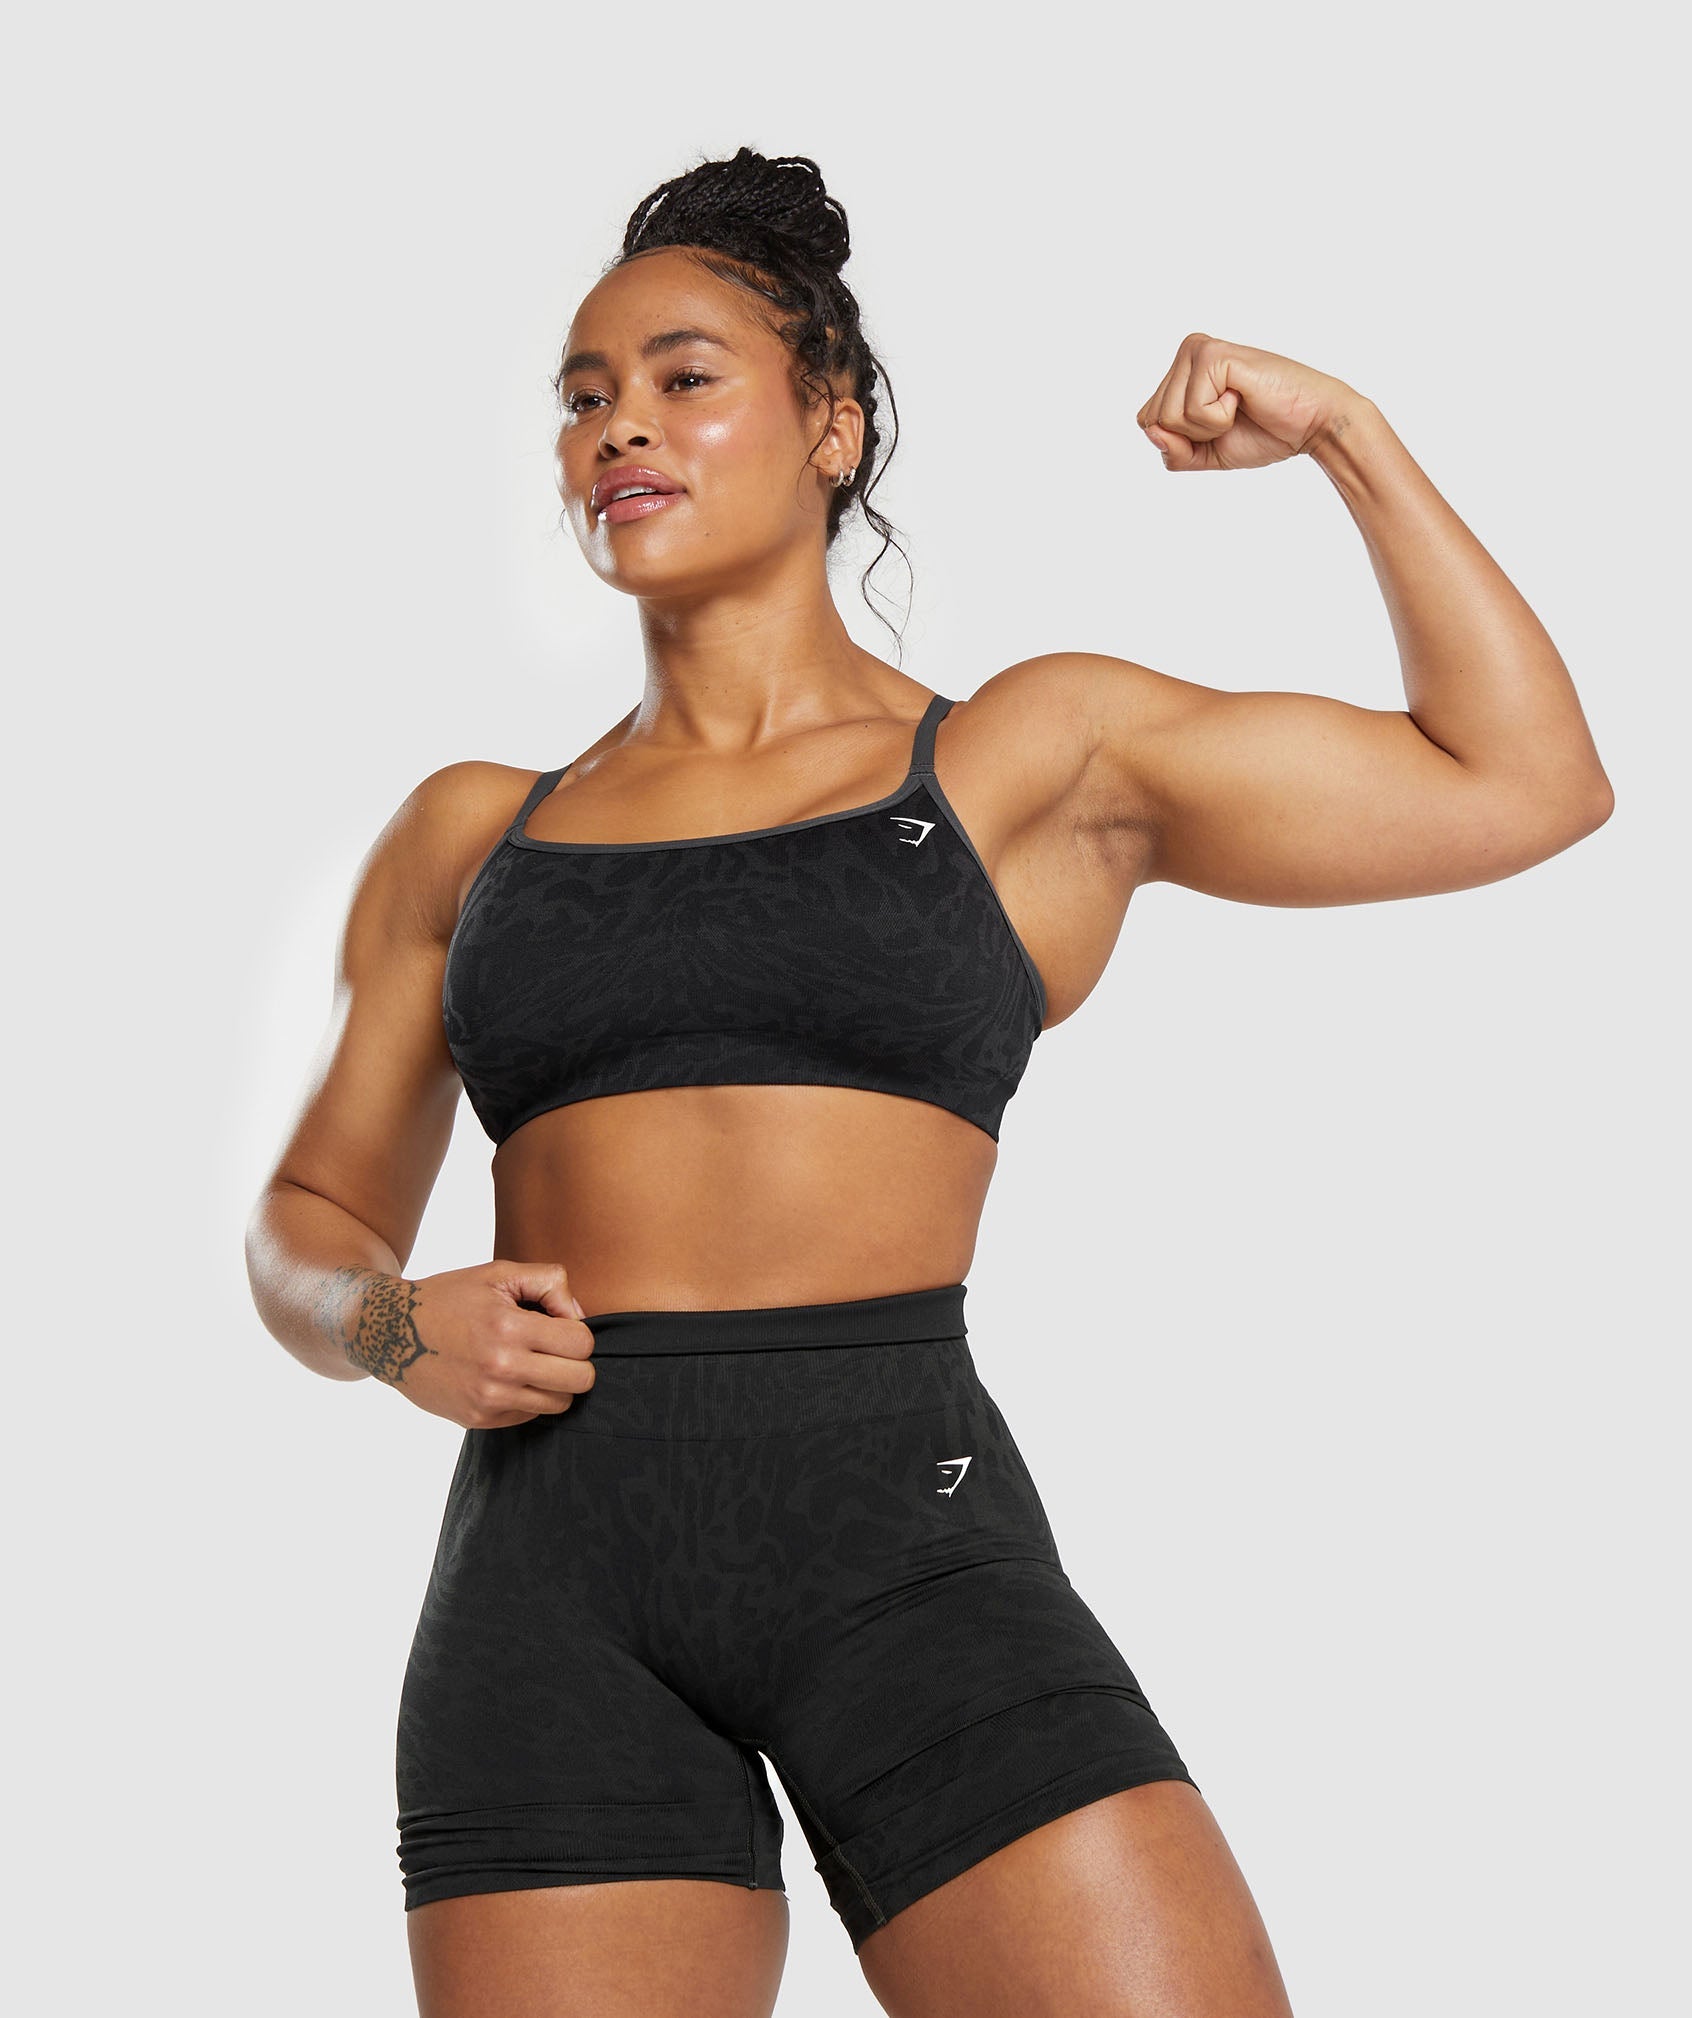 FINETOO Workout Outfits Sets for Women 4 piece Seamless Backless Tank Sport  Bra High Waist Short Yoga Gym Matching Active Set